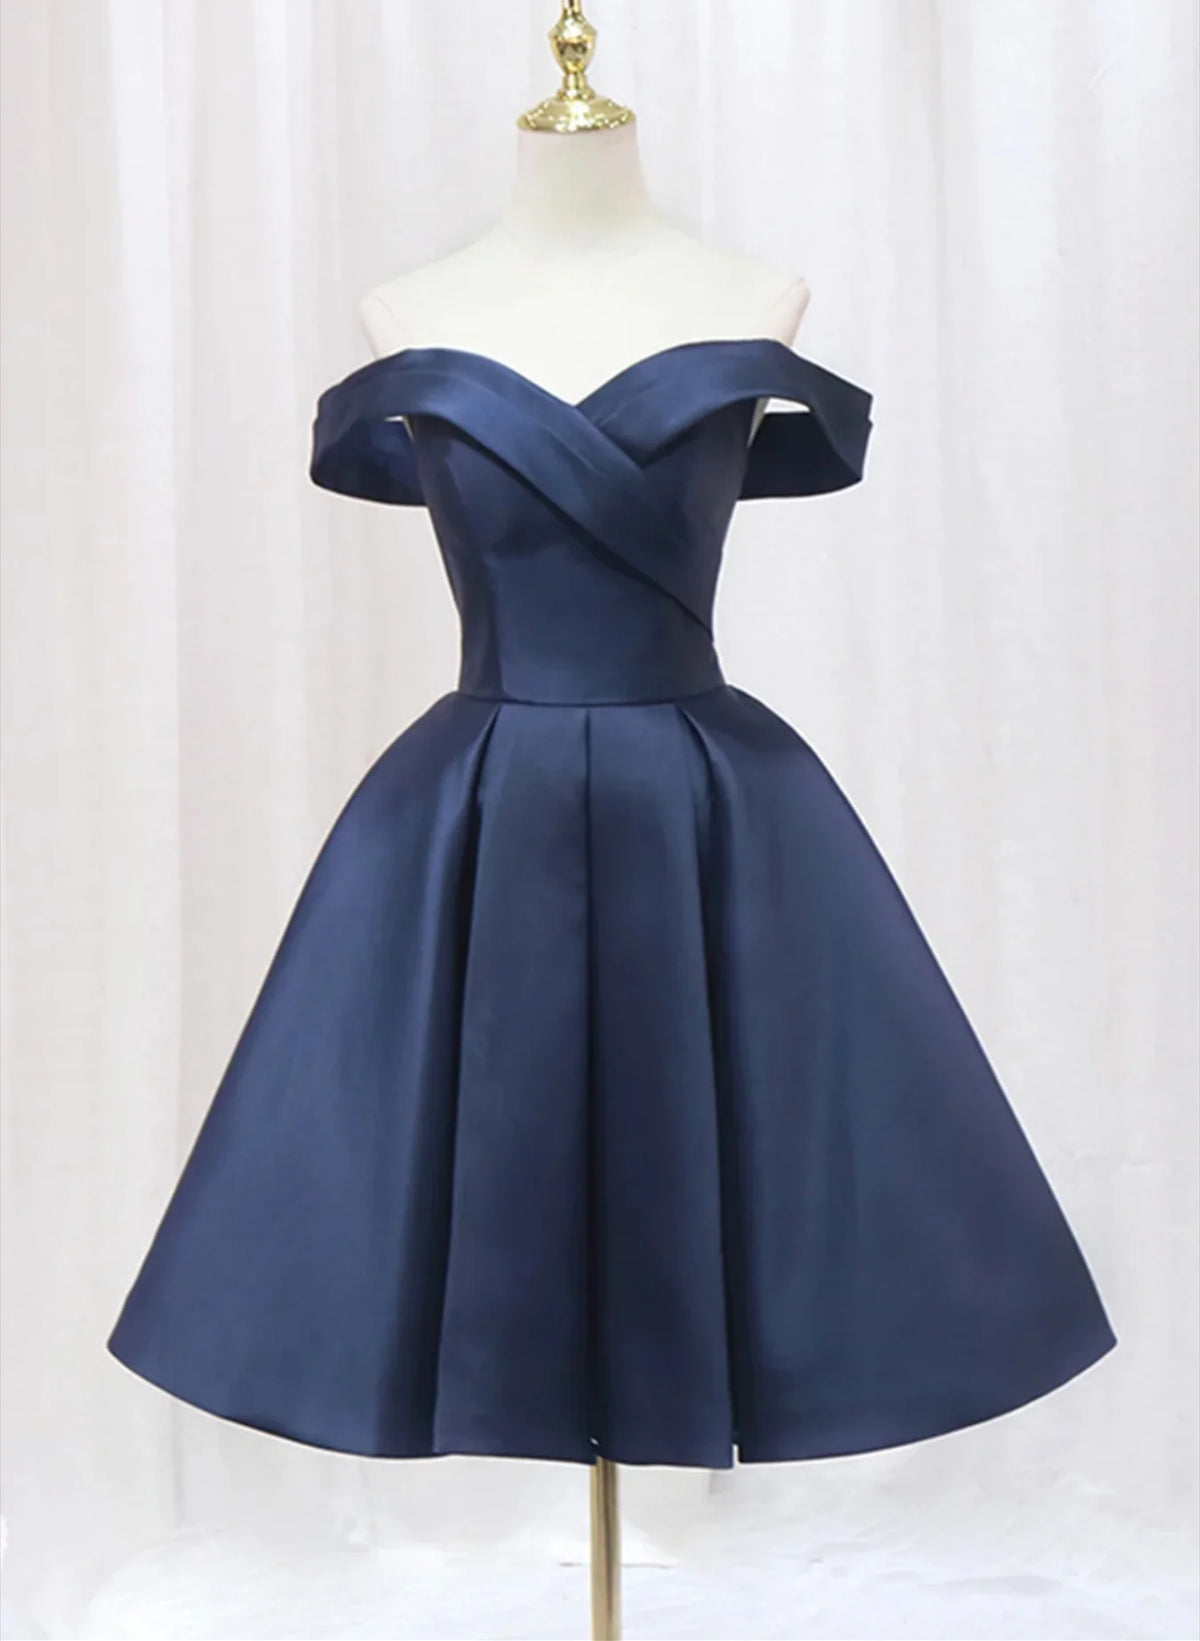 Bridesmaid Dresses Trends, Navy Blue Satin Off Shoulder Knee Length Party Dress, Navy Blue Homecoming Dress